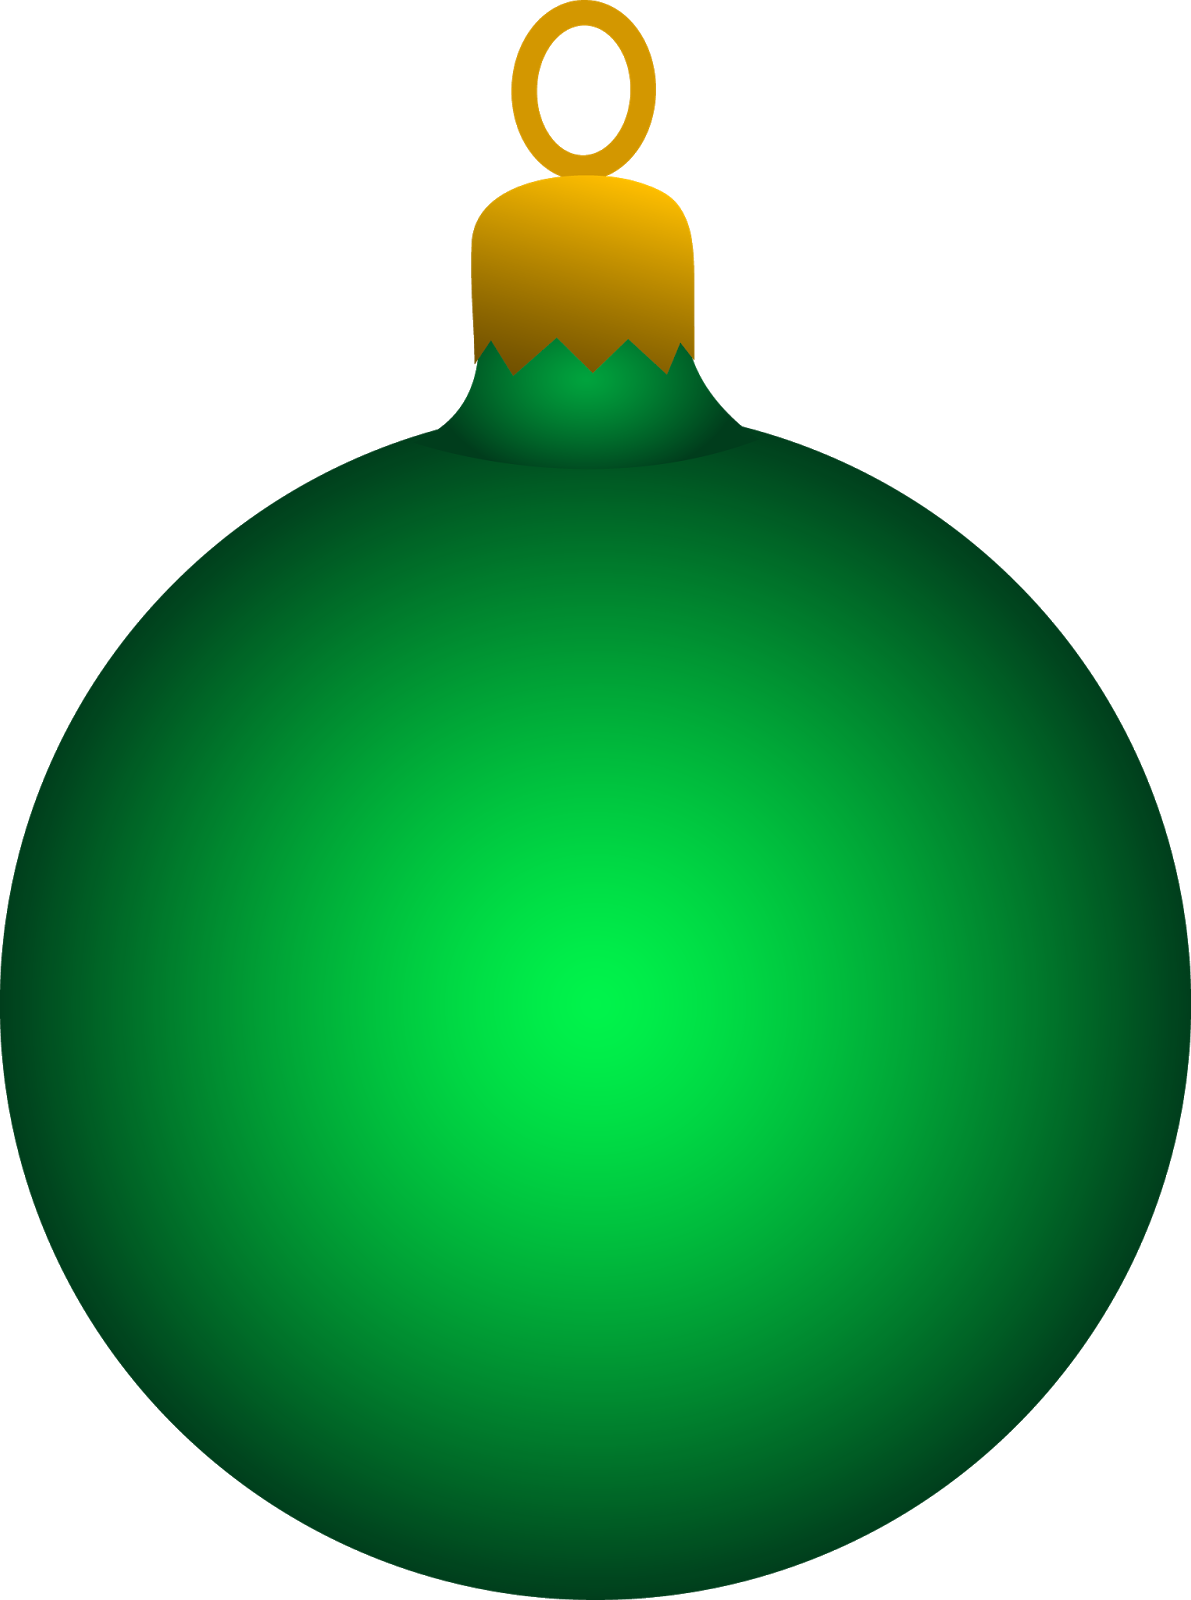 Clip Art Image of a Christmas